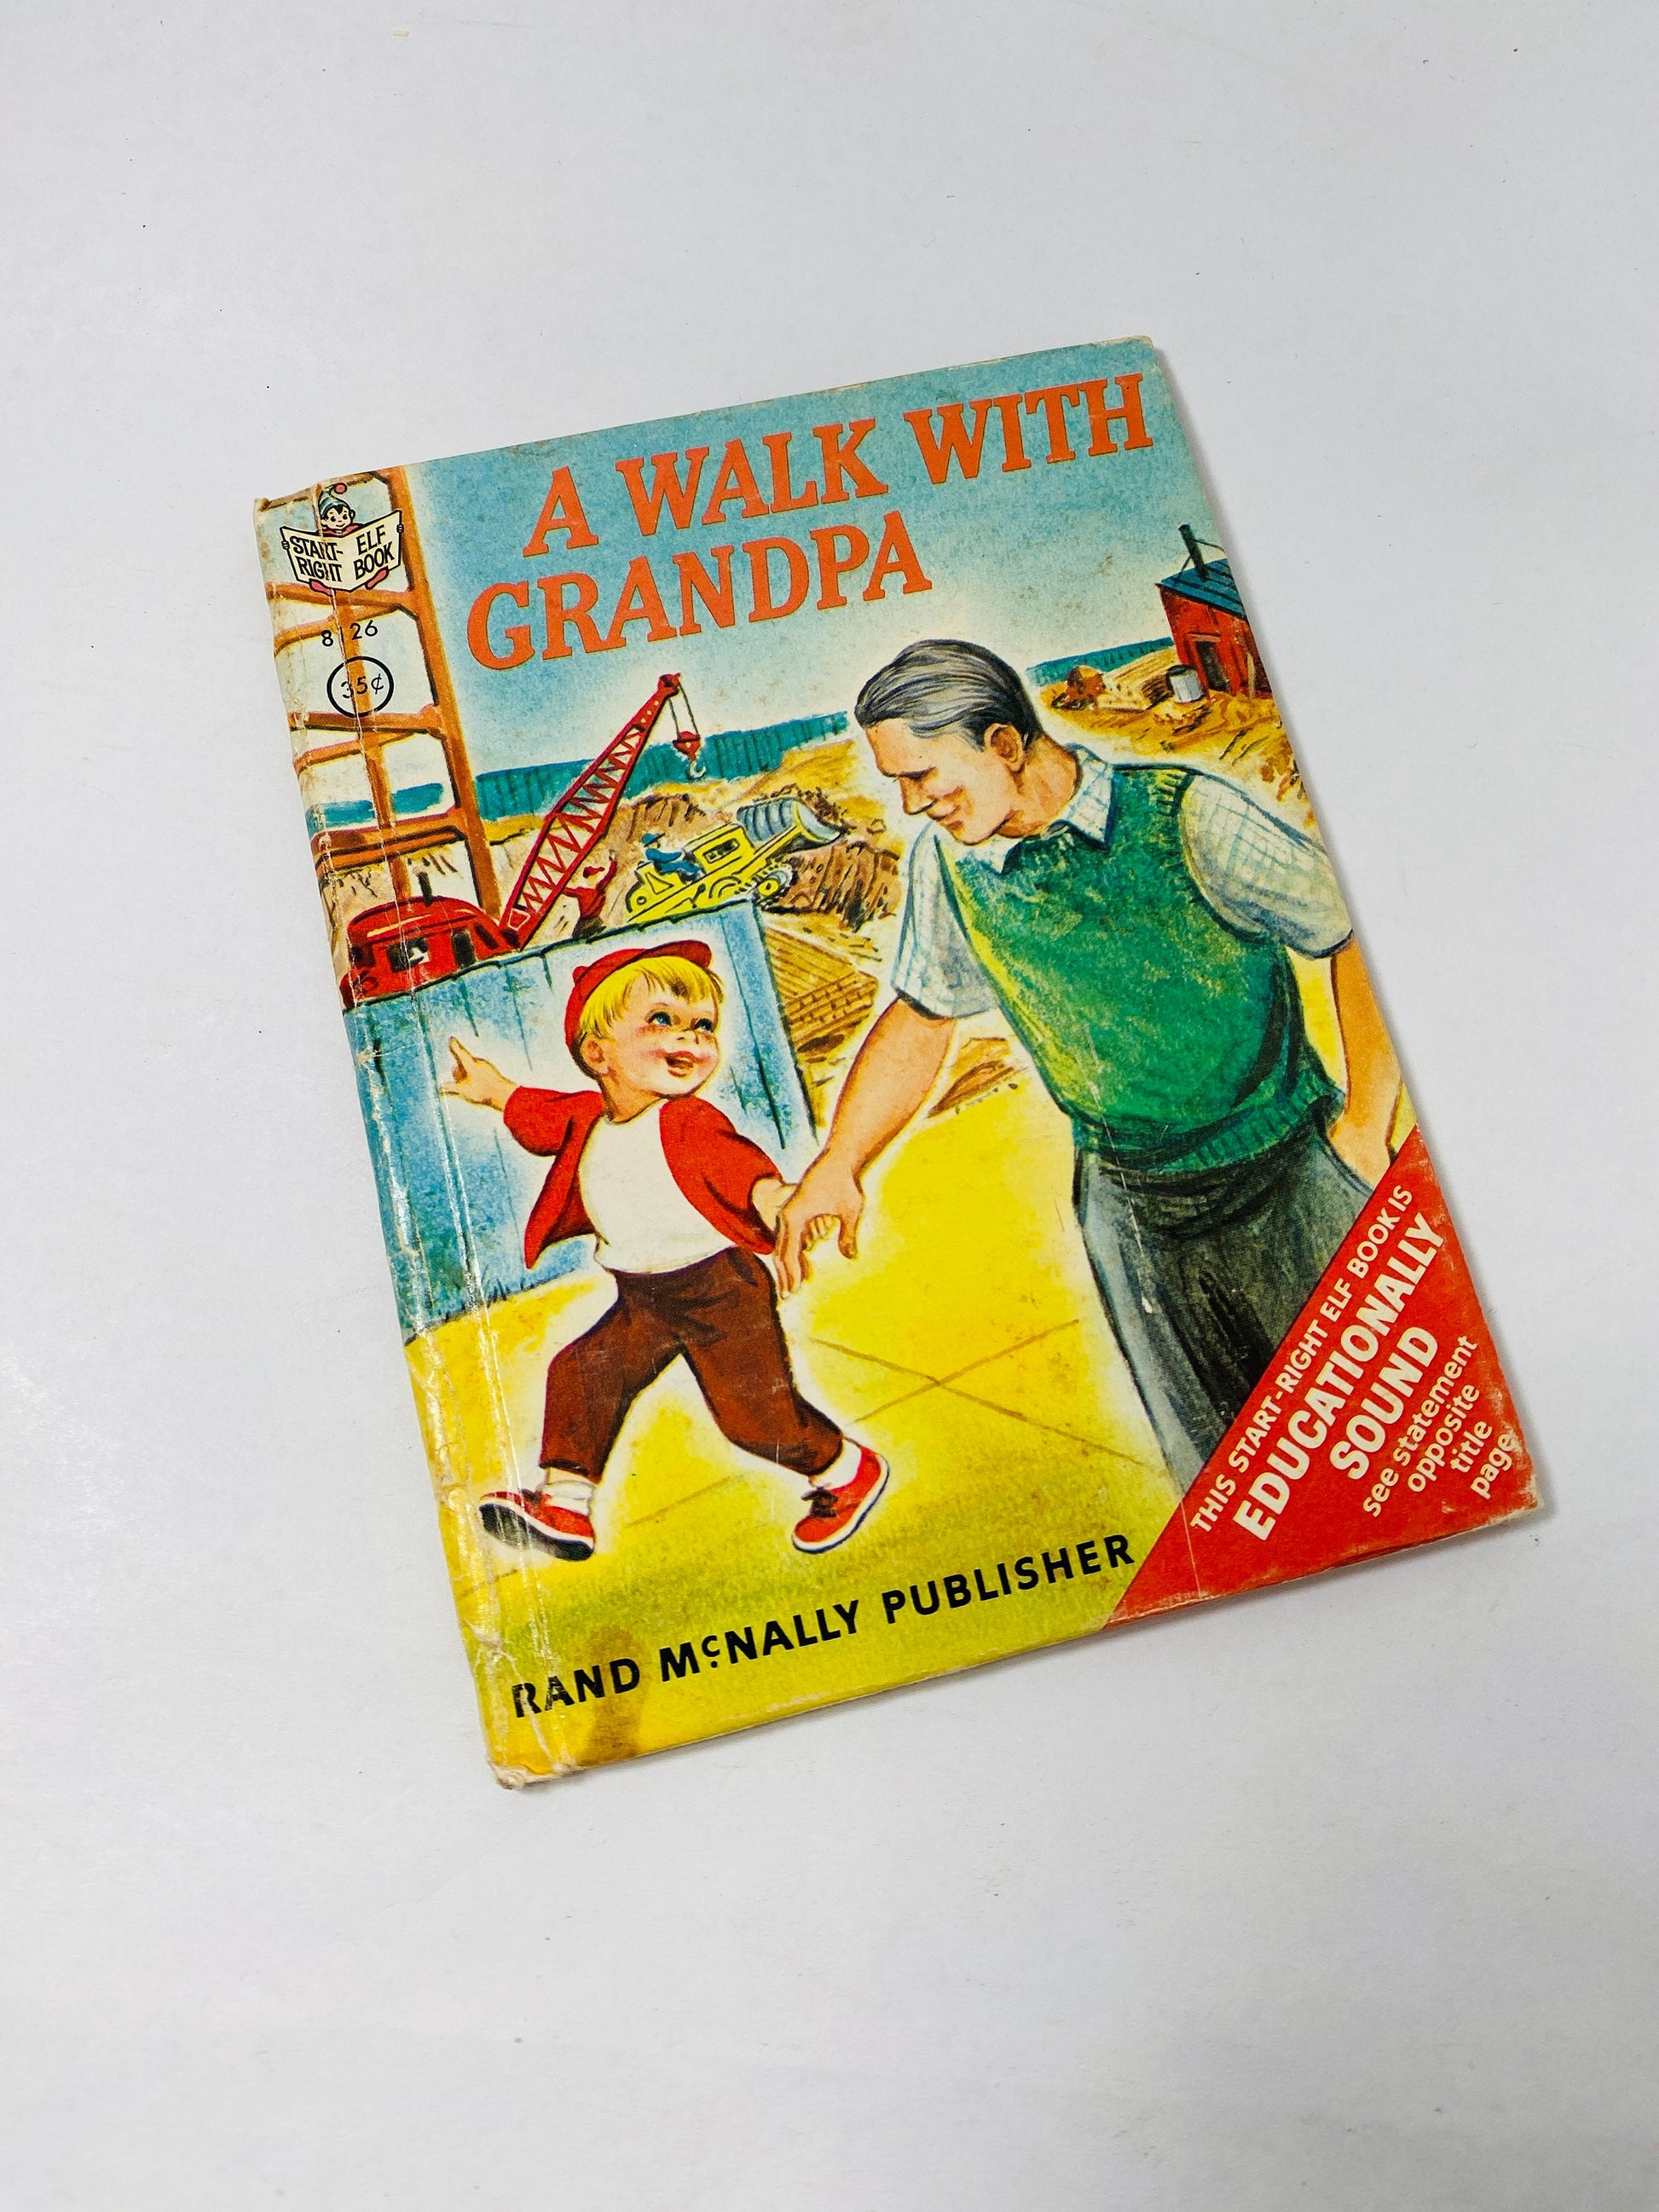 1948 vintage Little Golden Junior Elf Book Puppy Mickey & the Beanstalk Ponies Walk with Grandpa Lassie Rand McNally Stocking stuffer kids